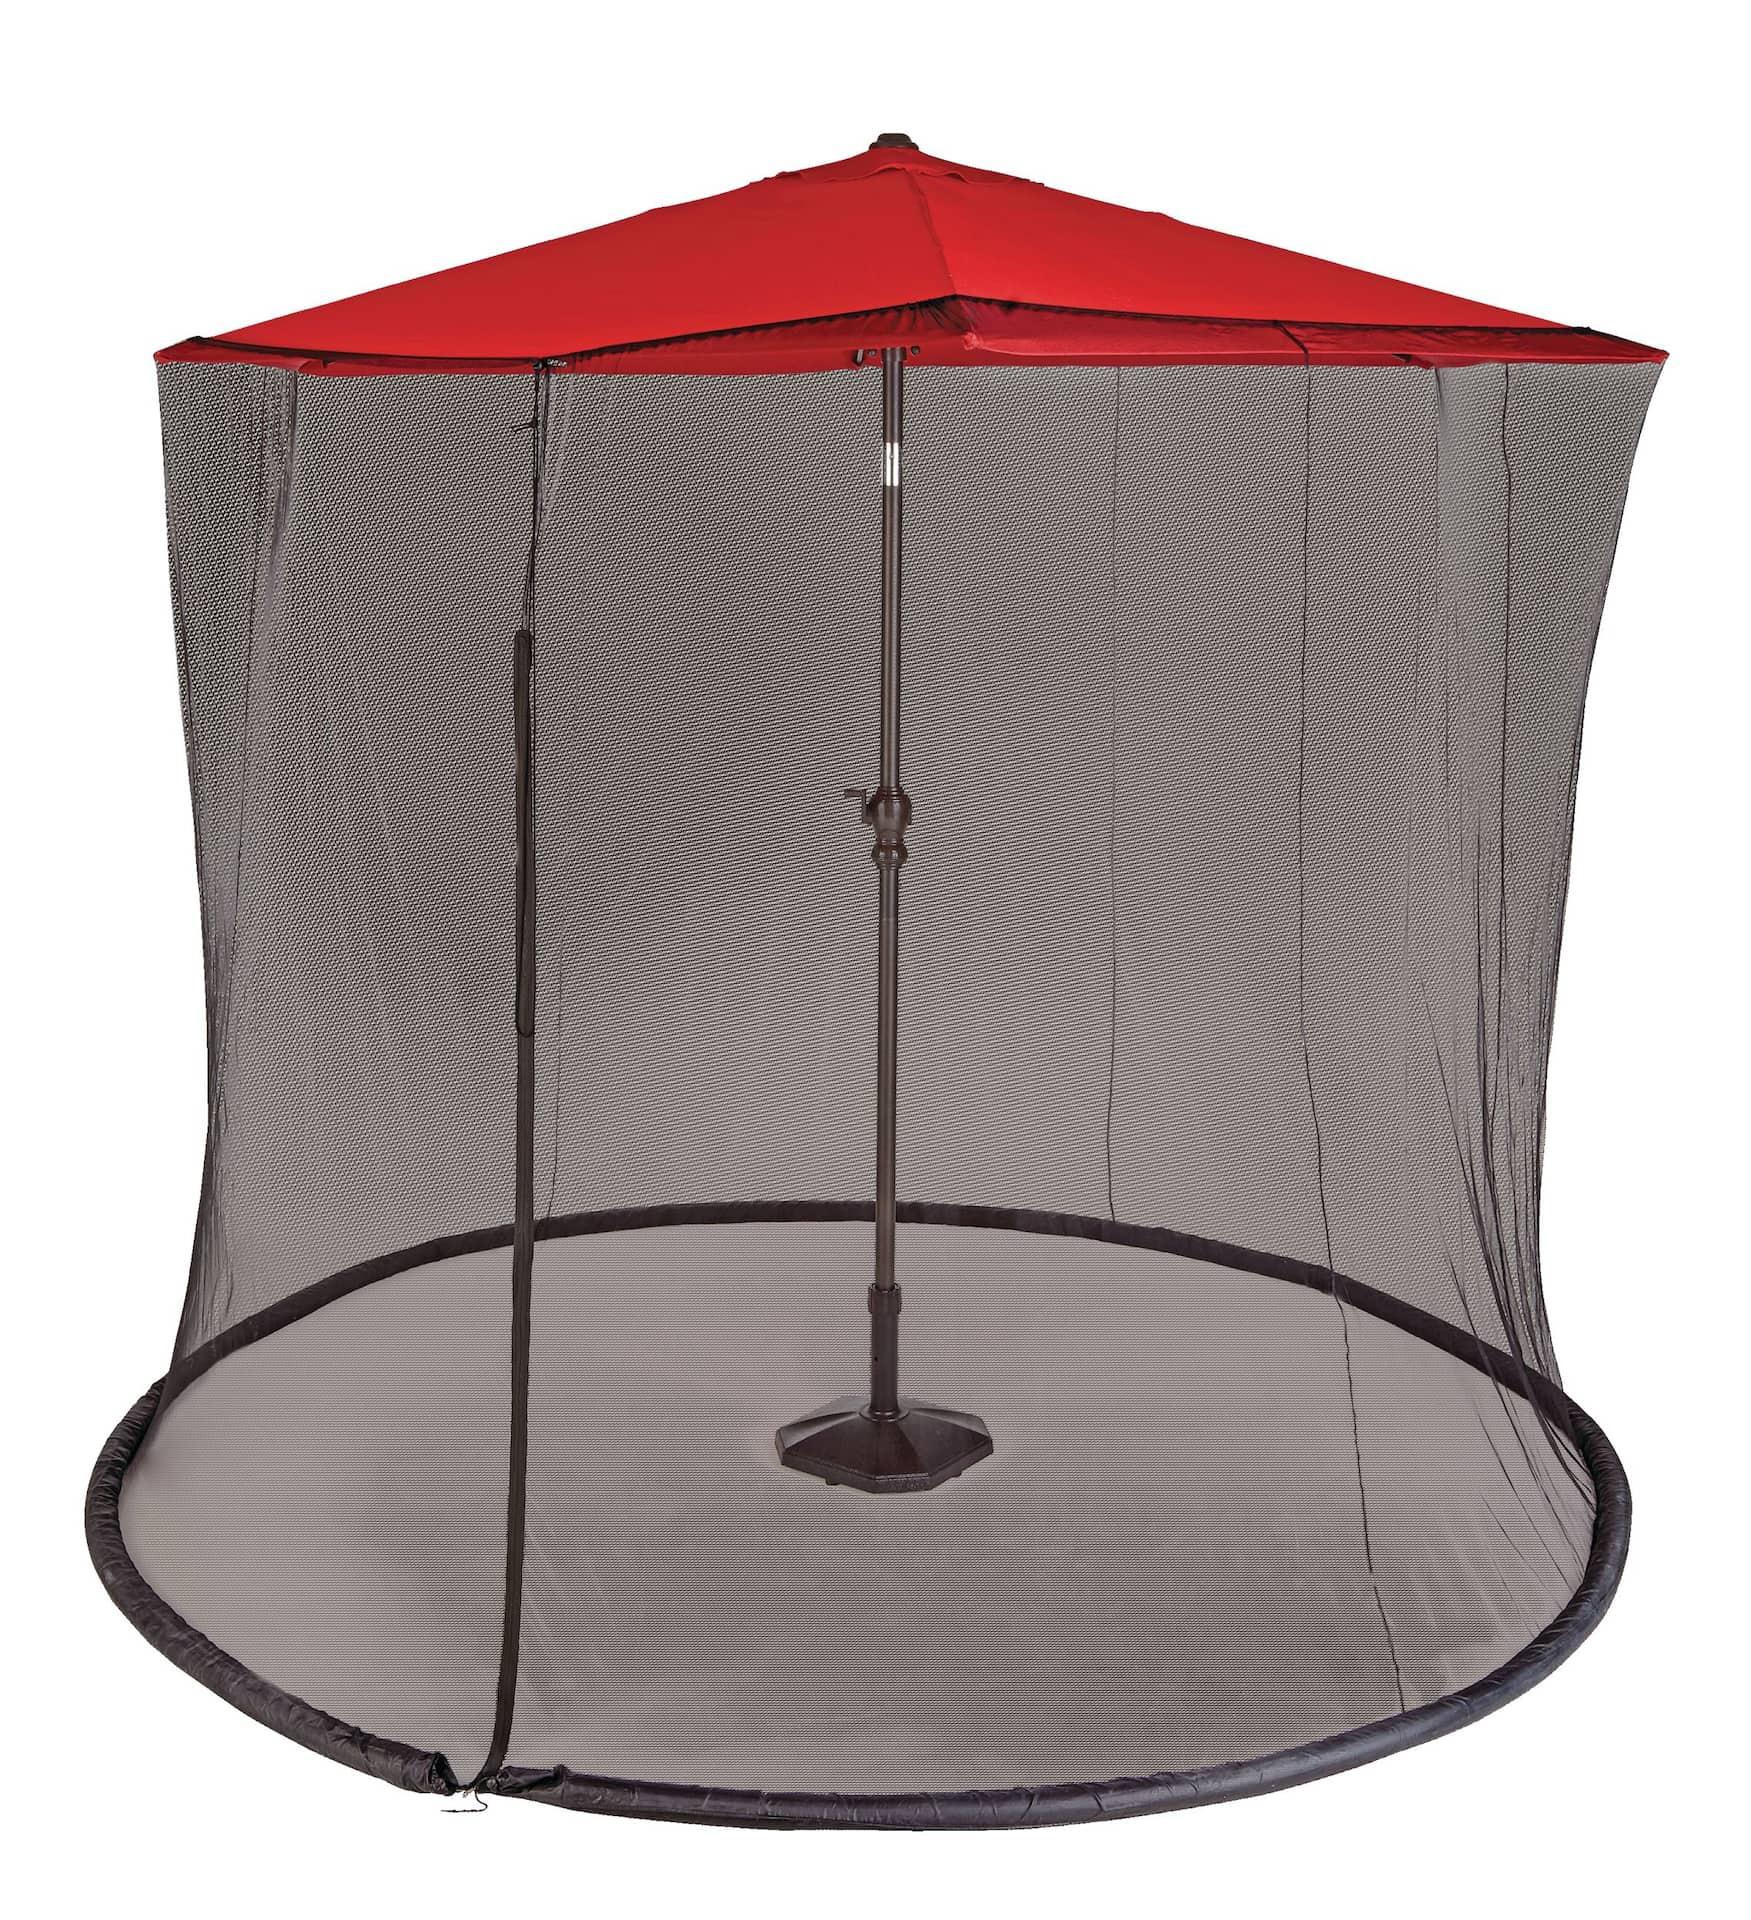 CANVAS Round Outdoor/Patio Umbrella Netting, Black, 7 to 9-ft